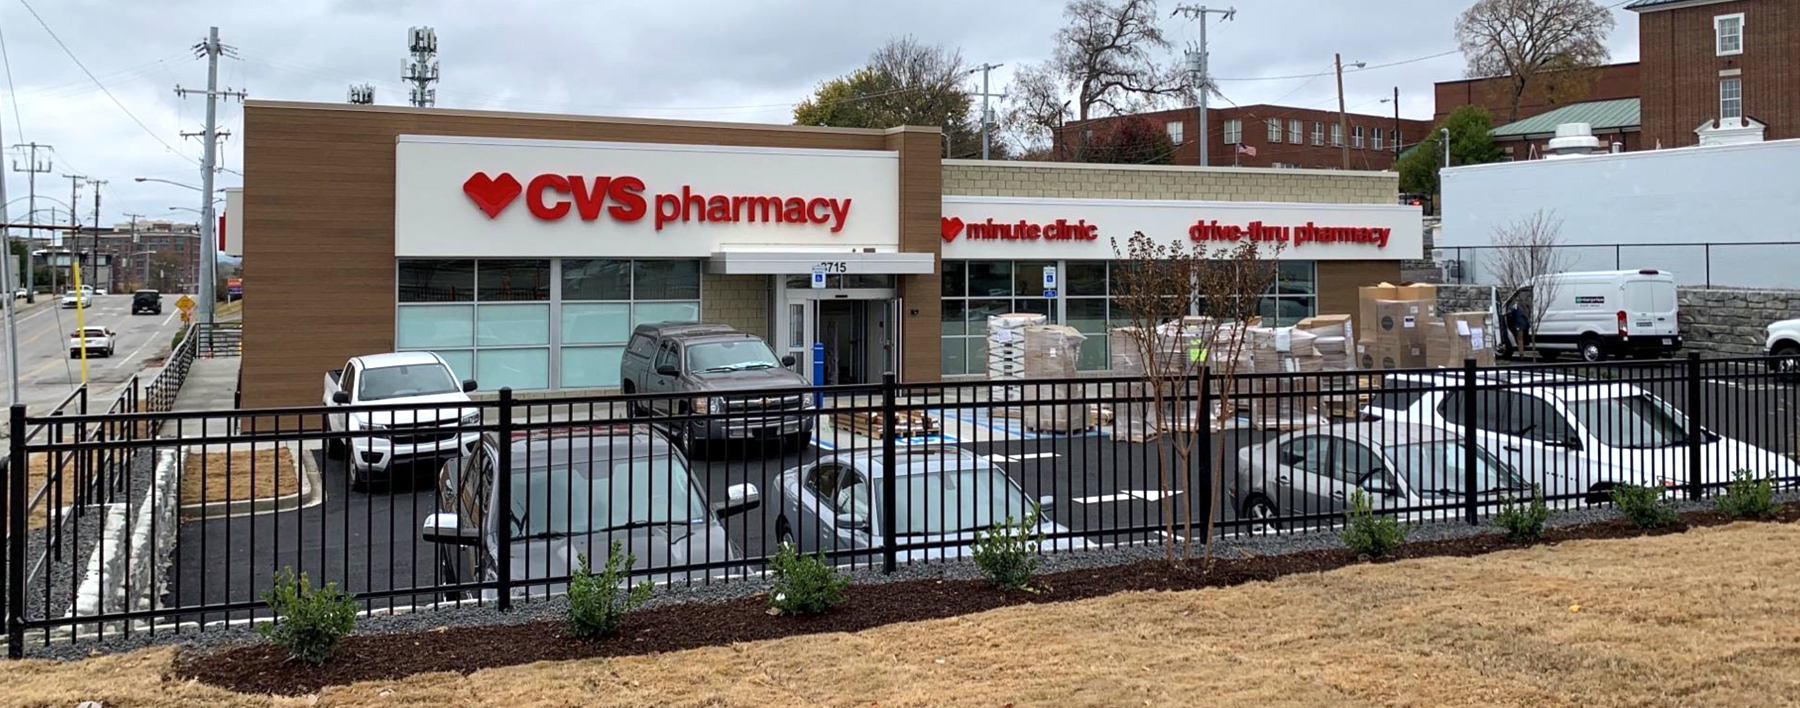 New CVS Pharmacy in Nashville, TN | GLR, Inc.